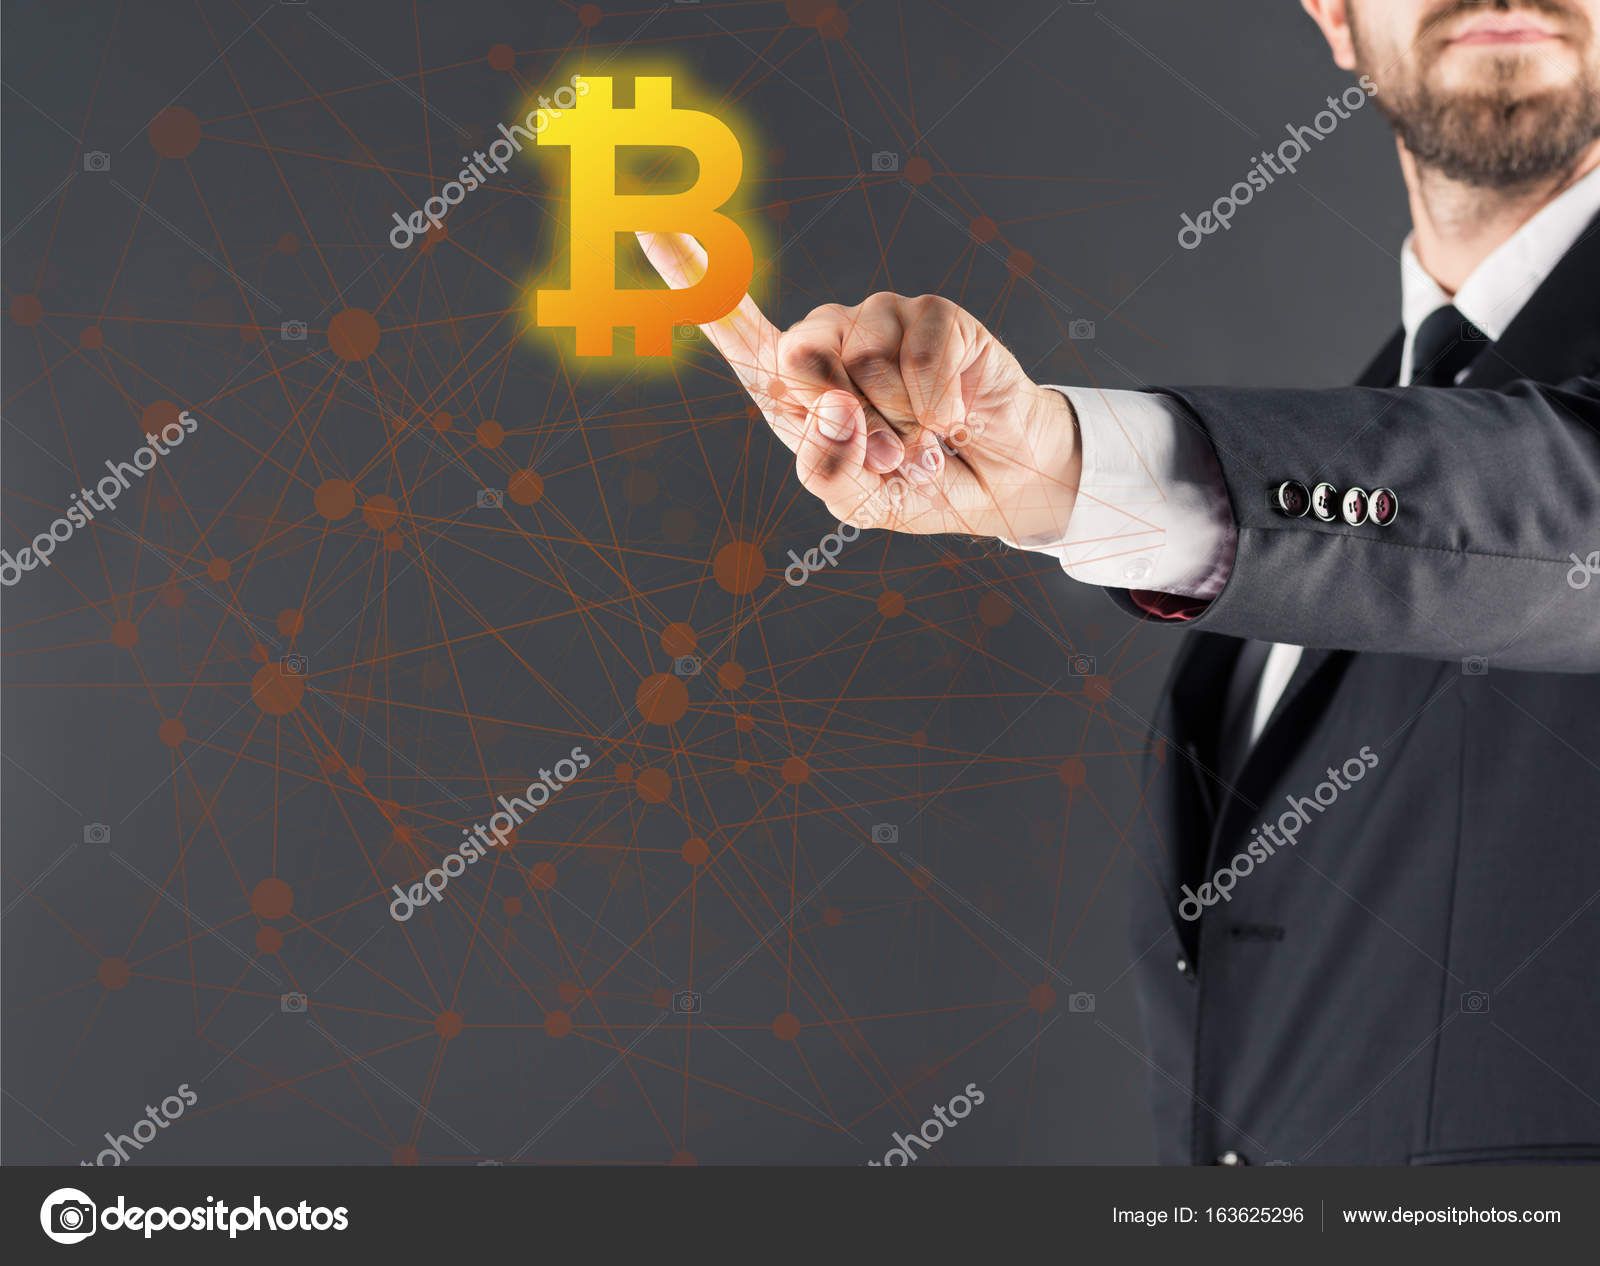 depositphotos_163625296-stock-photo-businessman-pointing-at-bitcoin.jpg